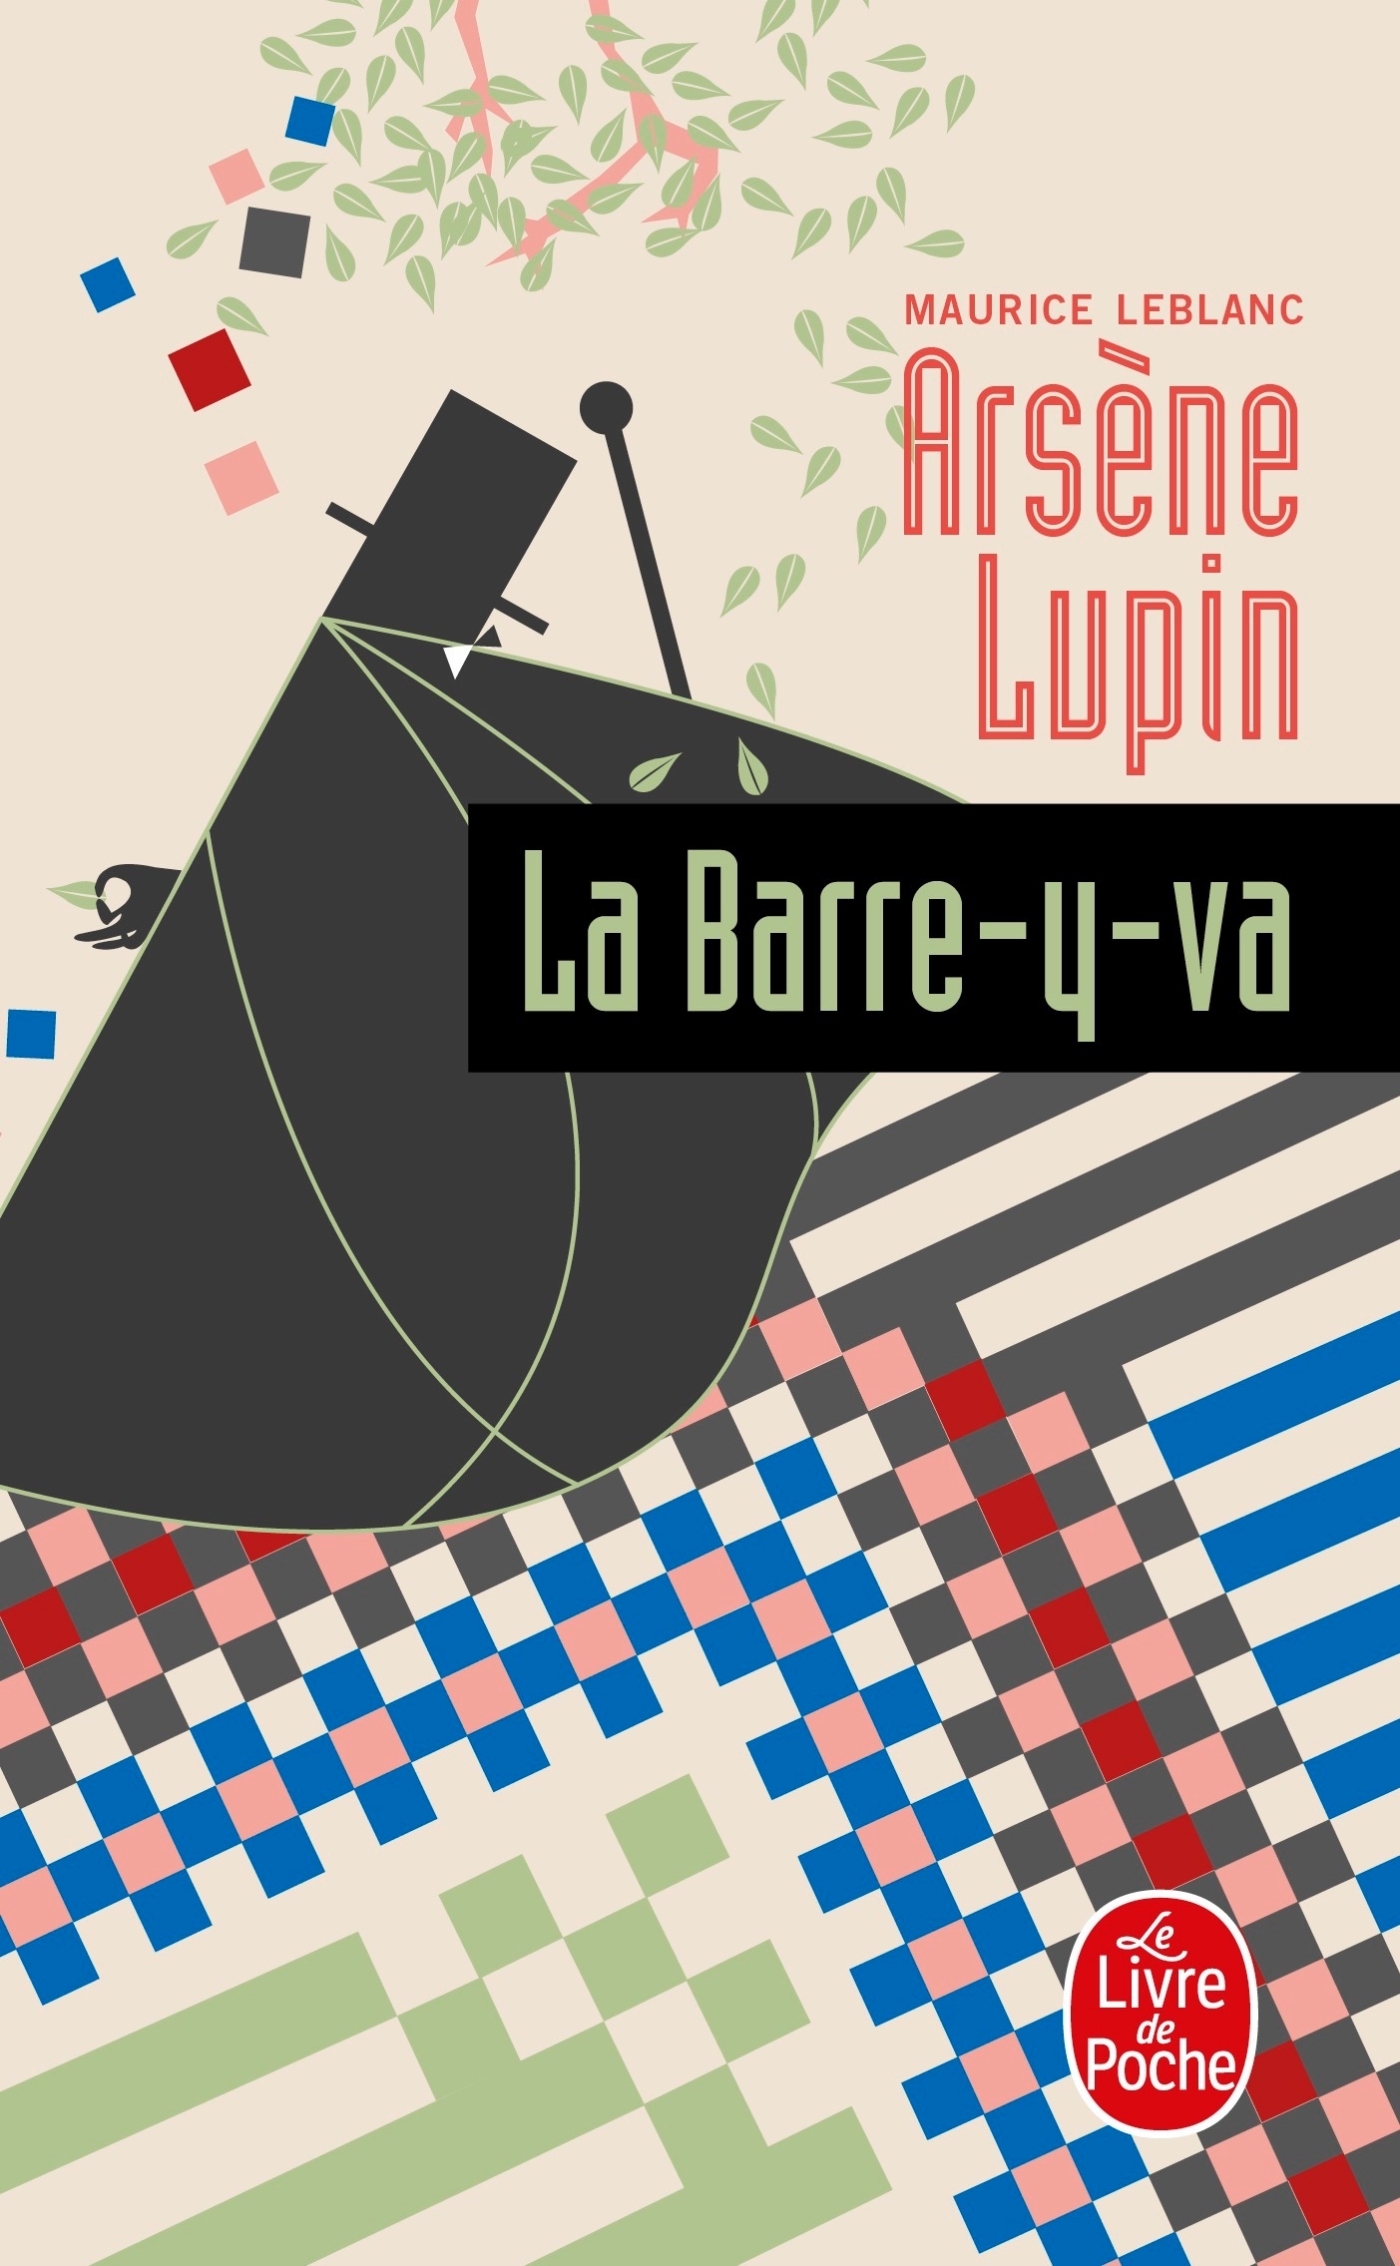 Arsène Lupin la barre-y-va, Arsène Lupin (9782253007005-front-cover)